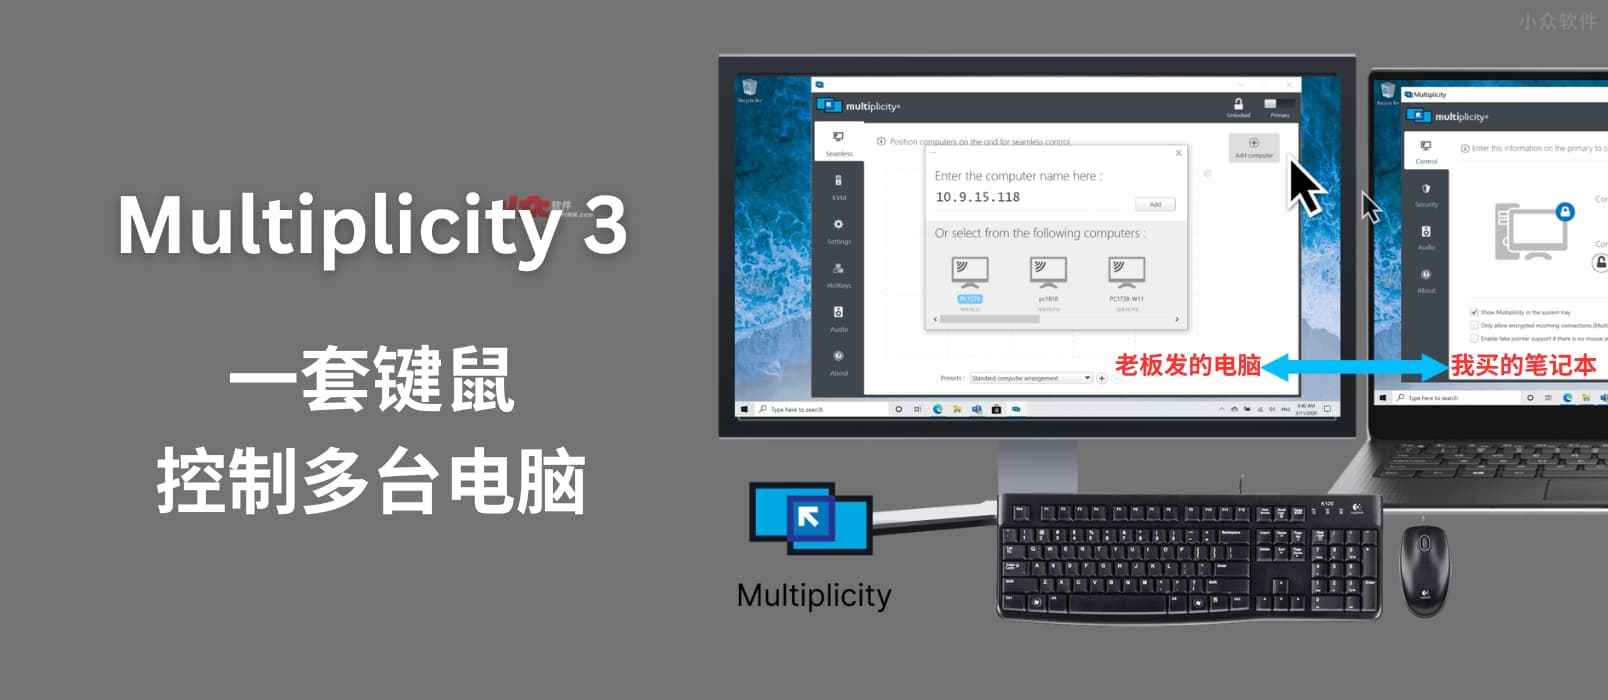 Multiplicity 3 - 通过一套键盘鼠标跨屏幕控制多达 9 台电脑，还能共享音频[Windows]